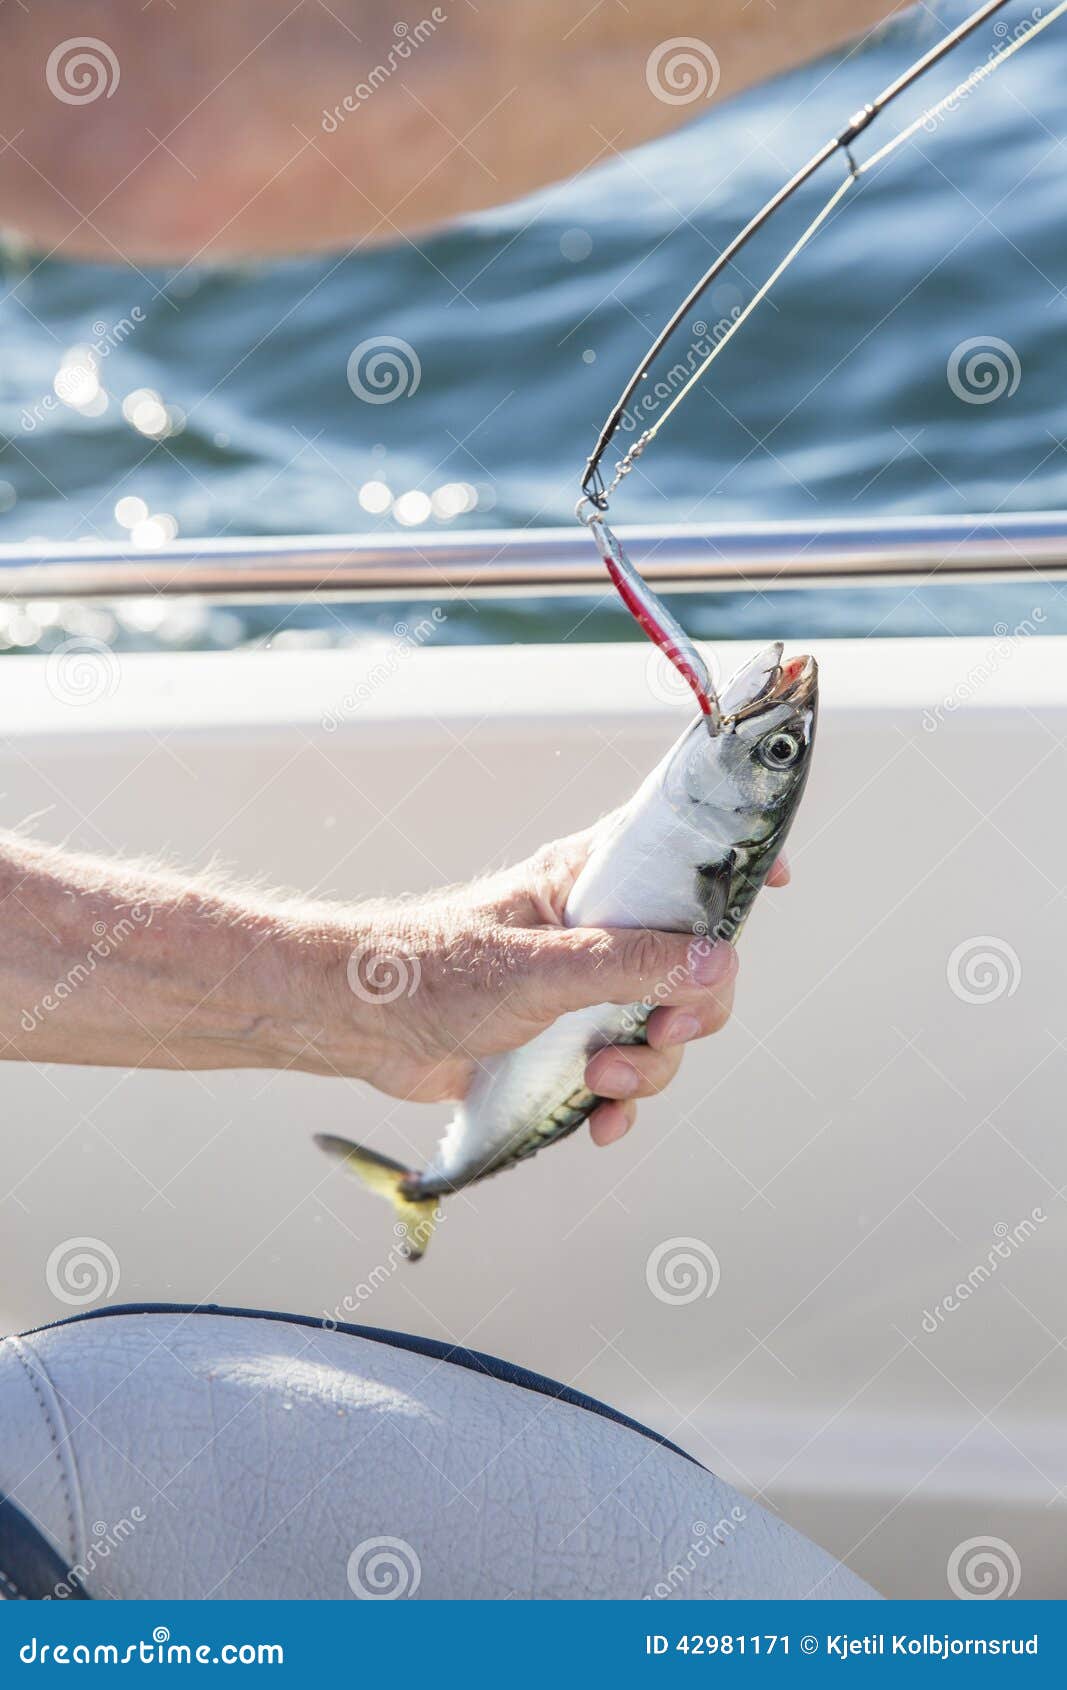 https://thumbs.dreamstime.com/z/man-fishing-mackerel-boat-sea-lures-hook-fresh-fish-42981171.jpg